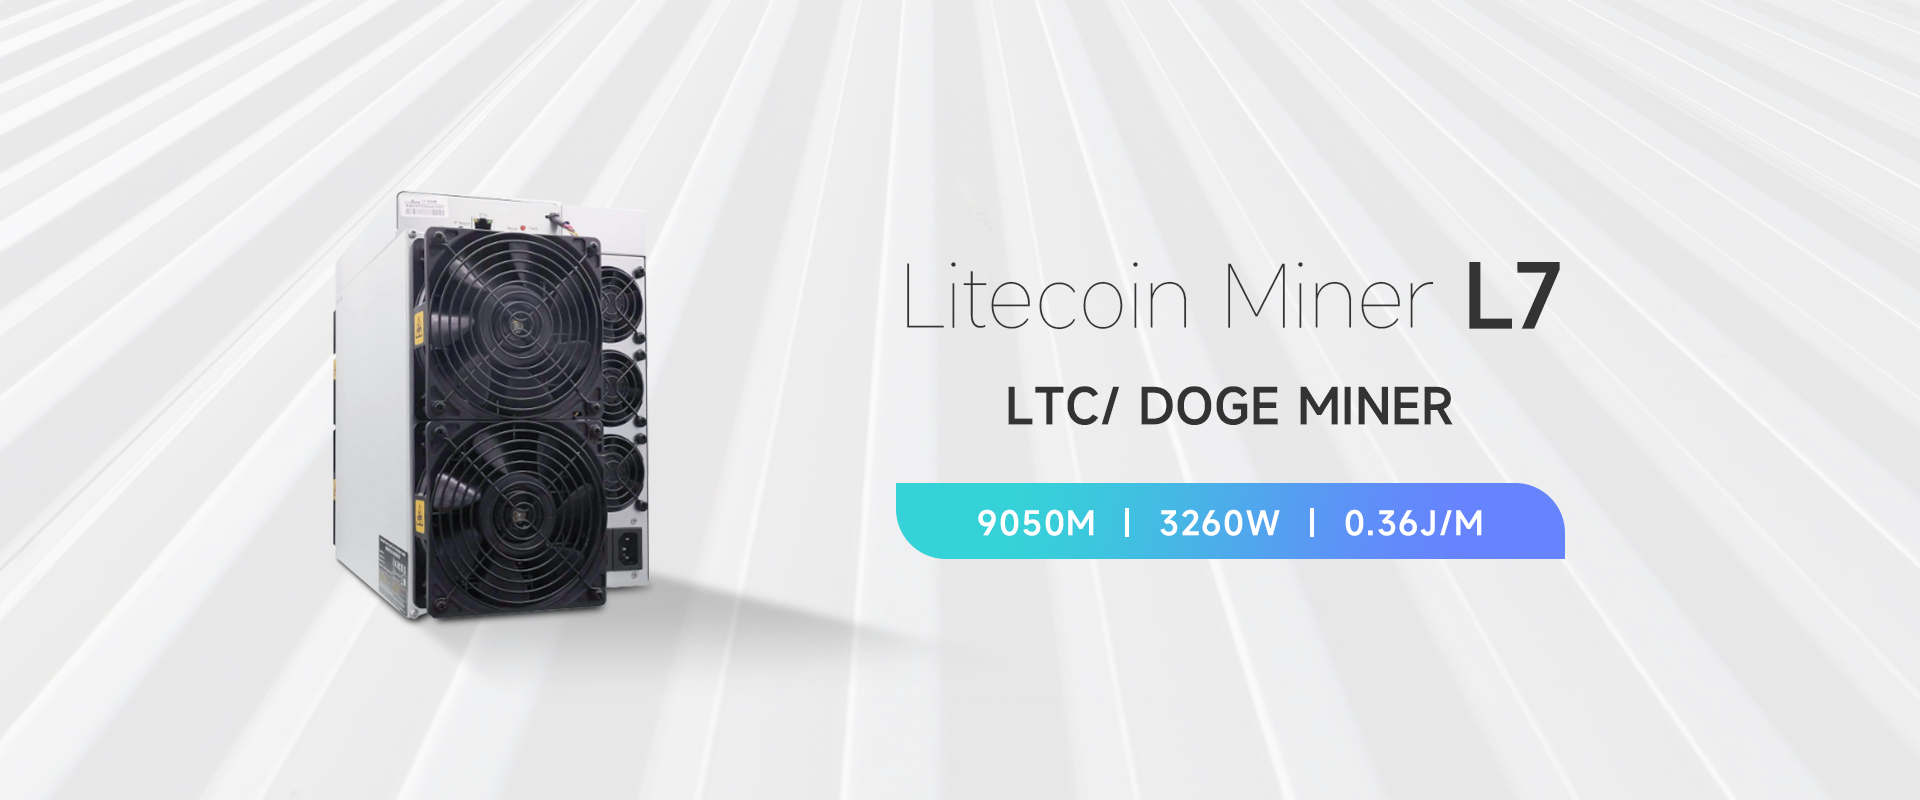 Litecoin-Miner-L7-01